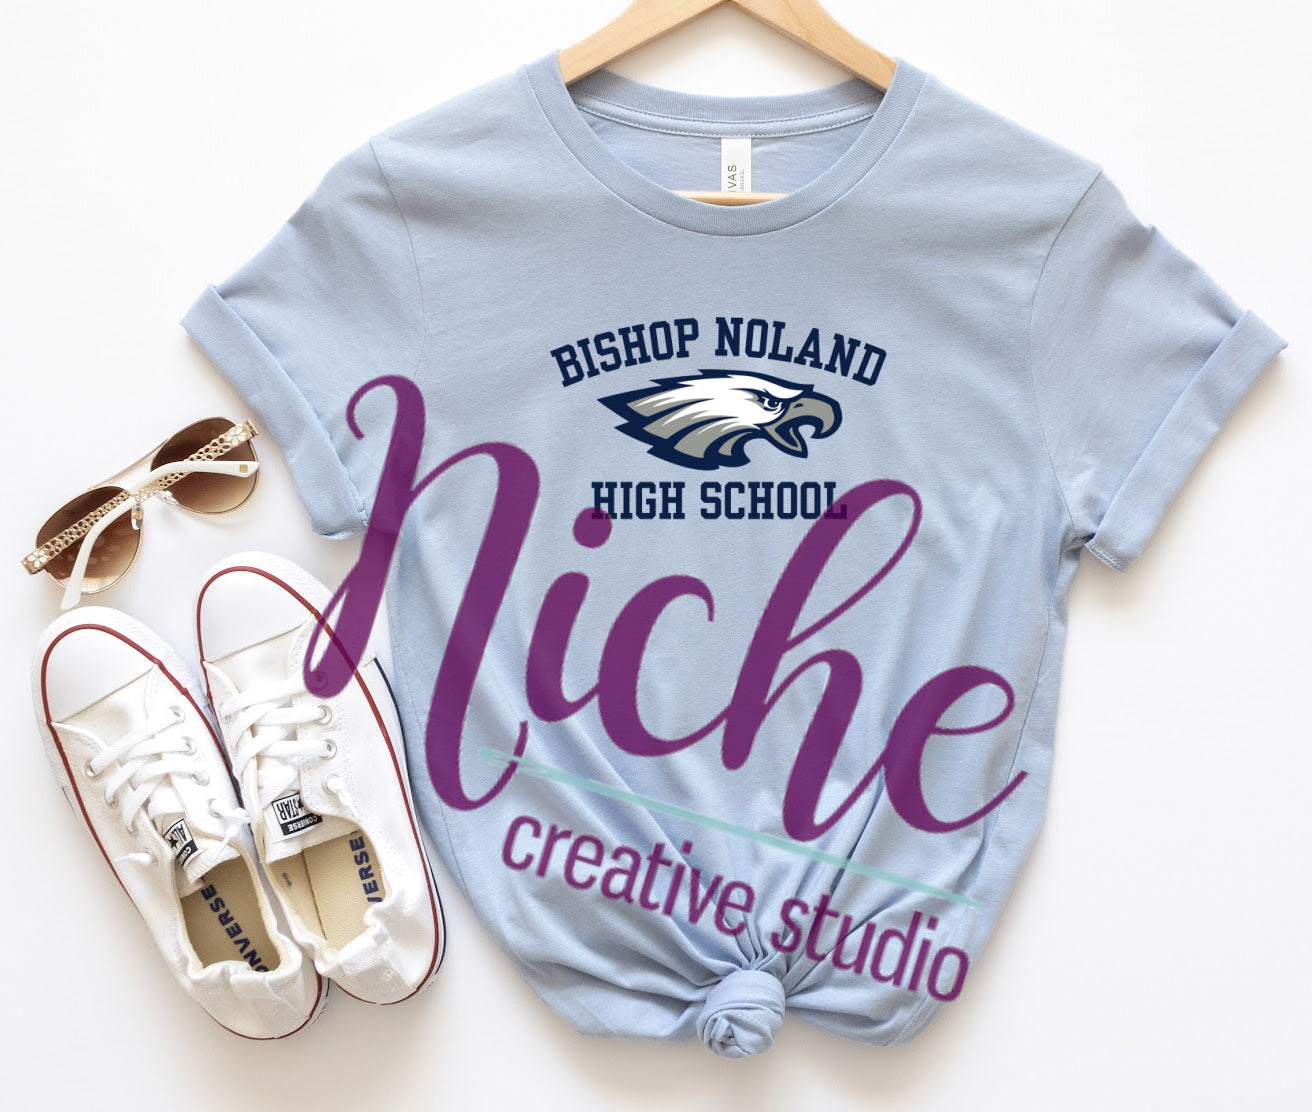  EDS503 Noland High School Decal Niche Creative Studio